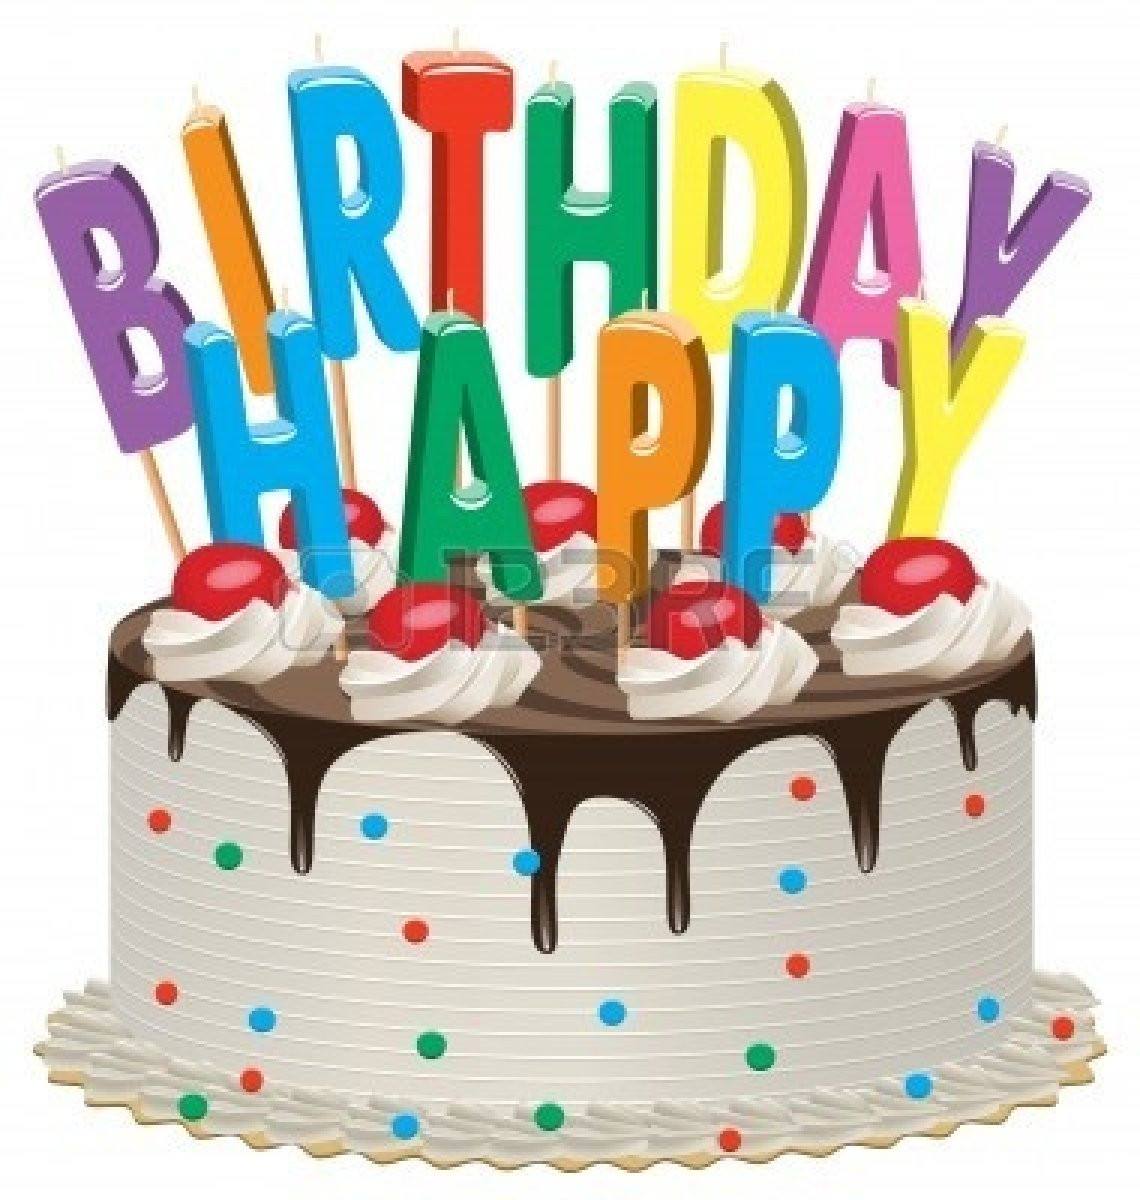 Birthday Cake Graphic
 Clipart of Happy Birthday Cake – 101 Clip Art